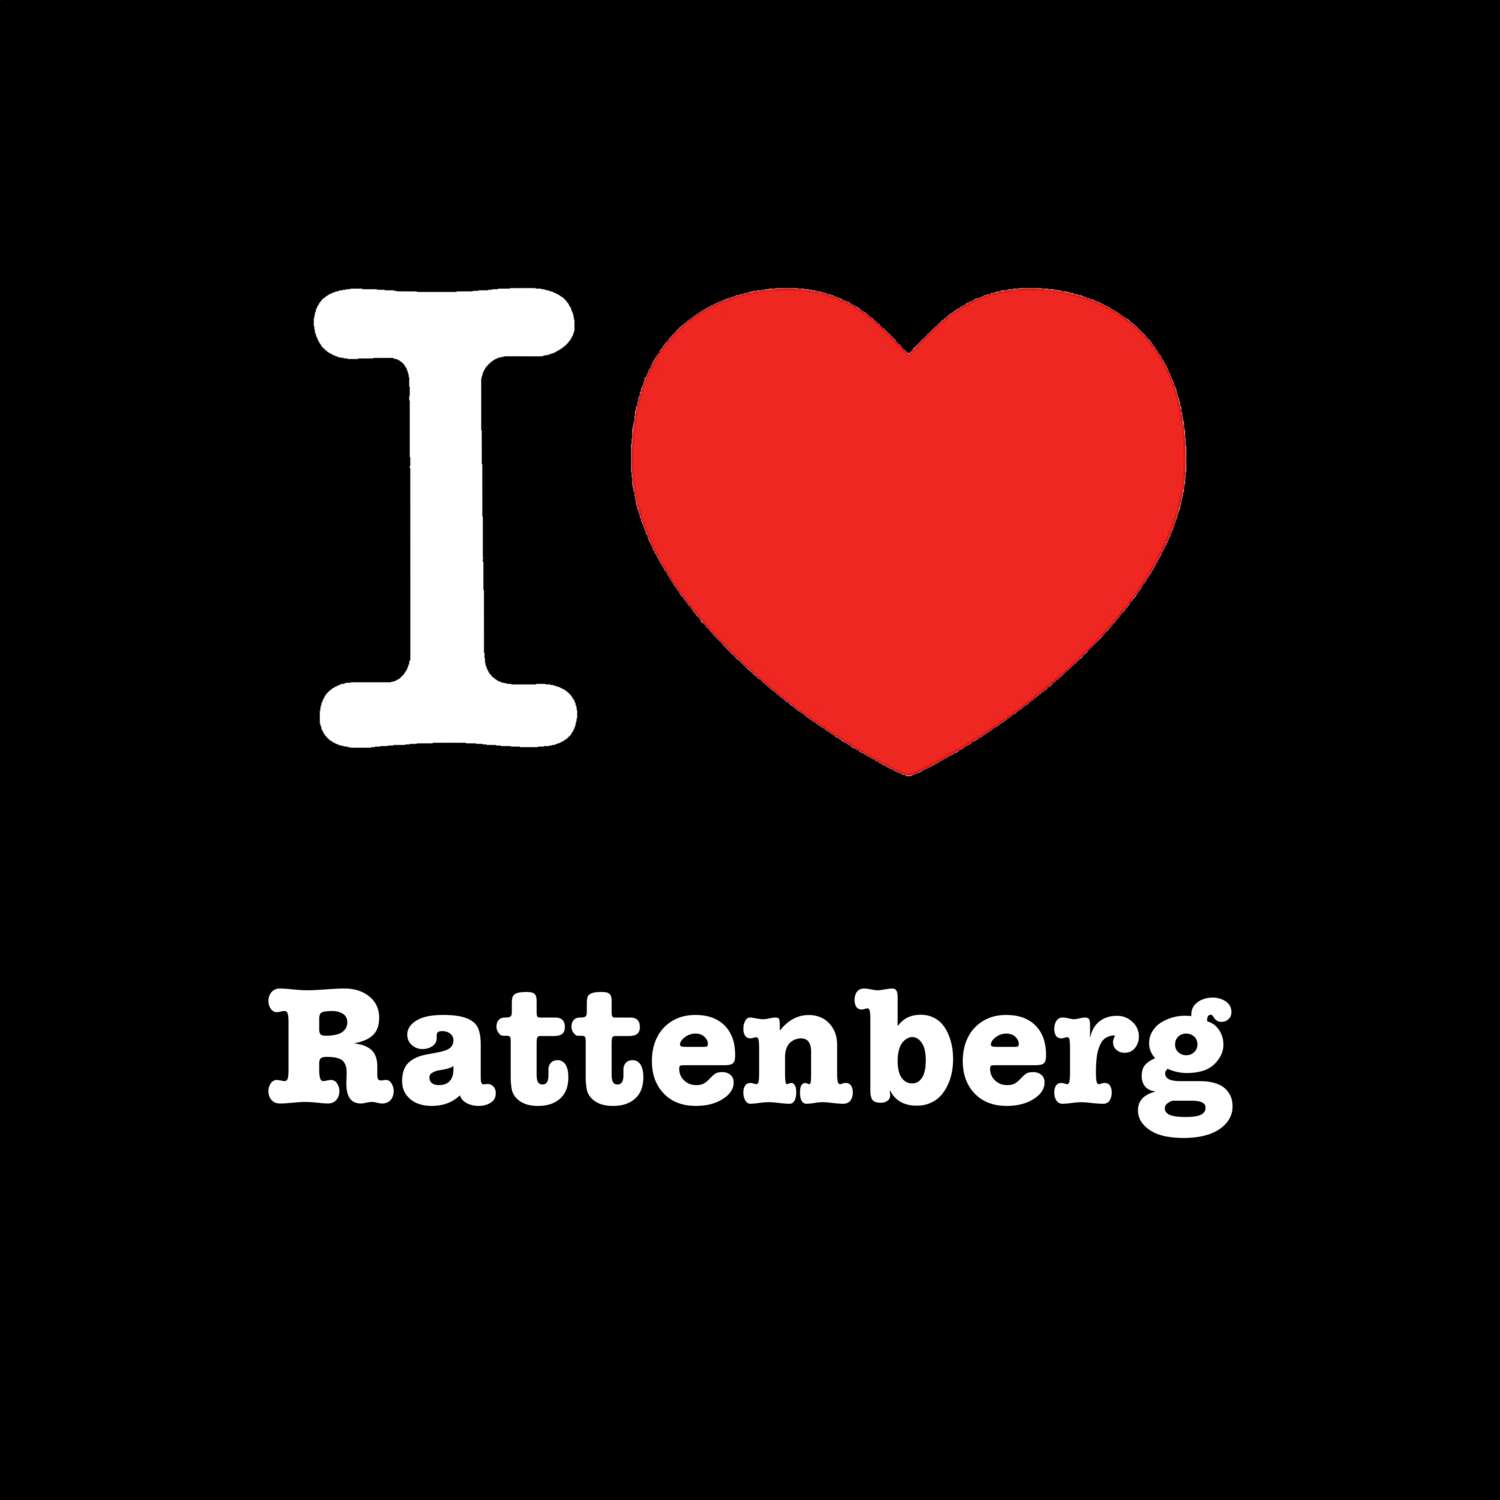 Rattenberg T-Shirt »I love«